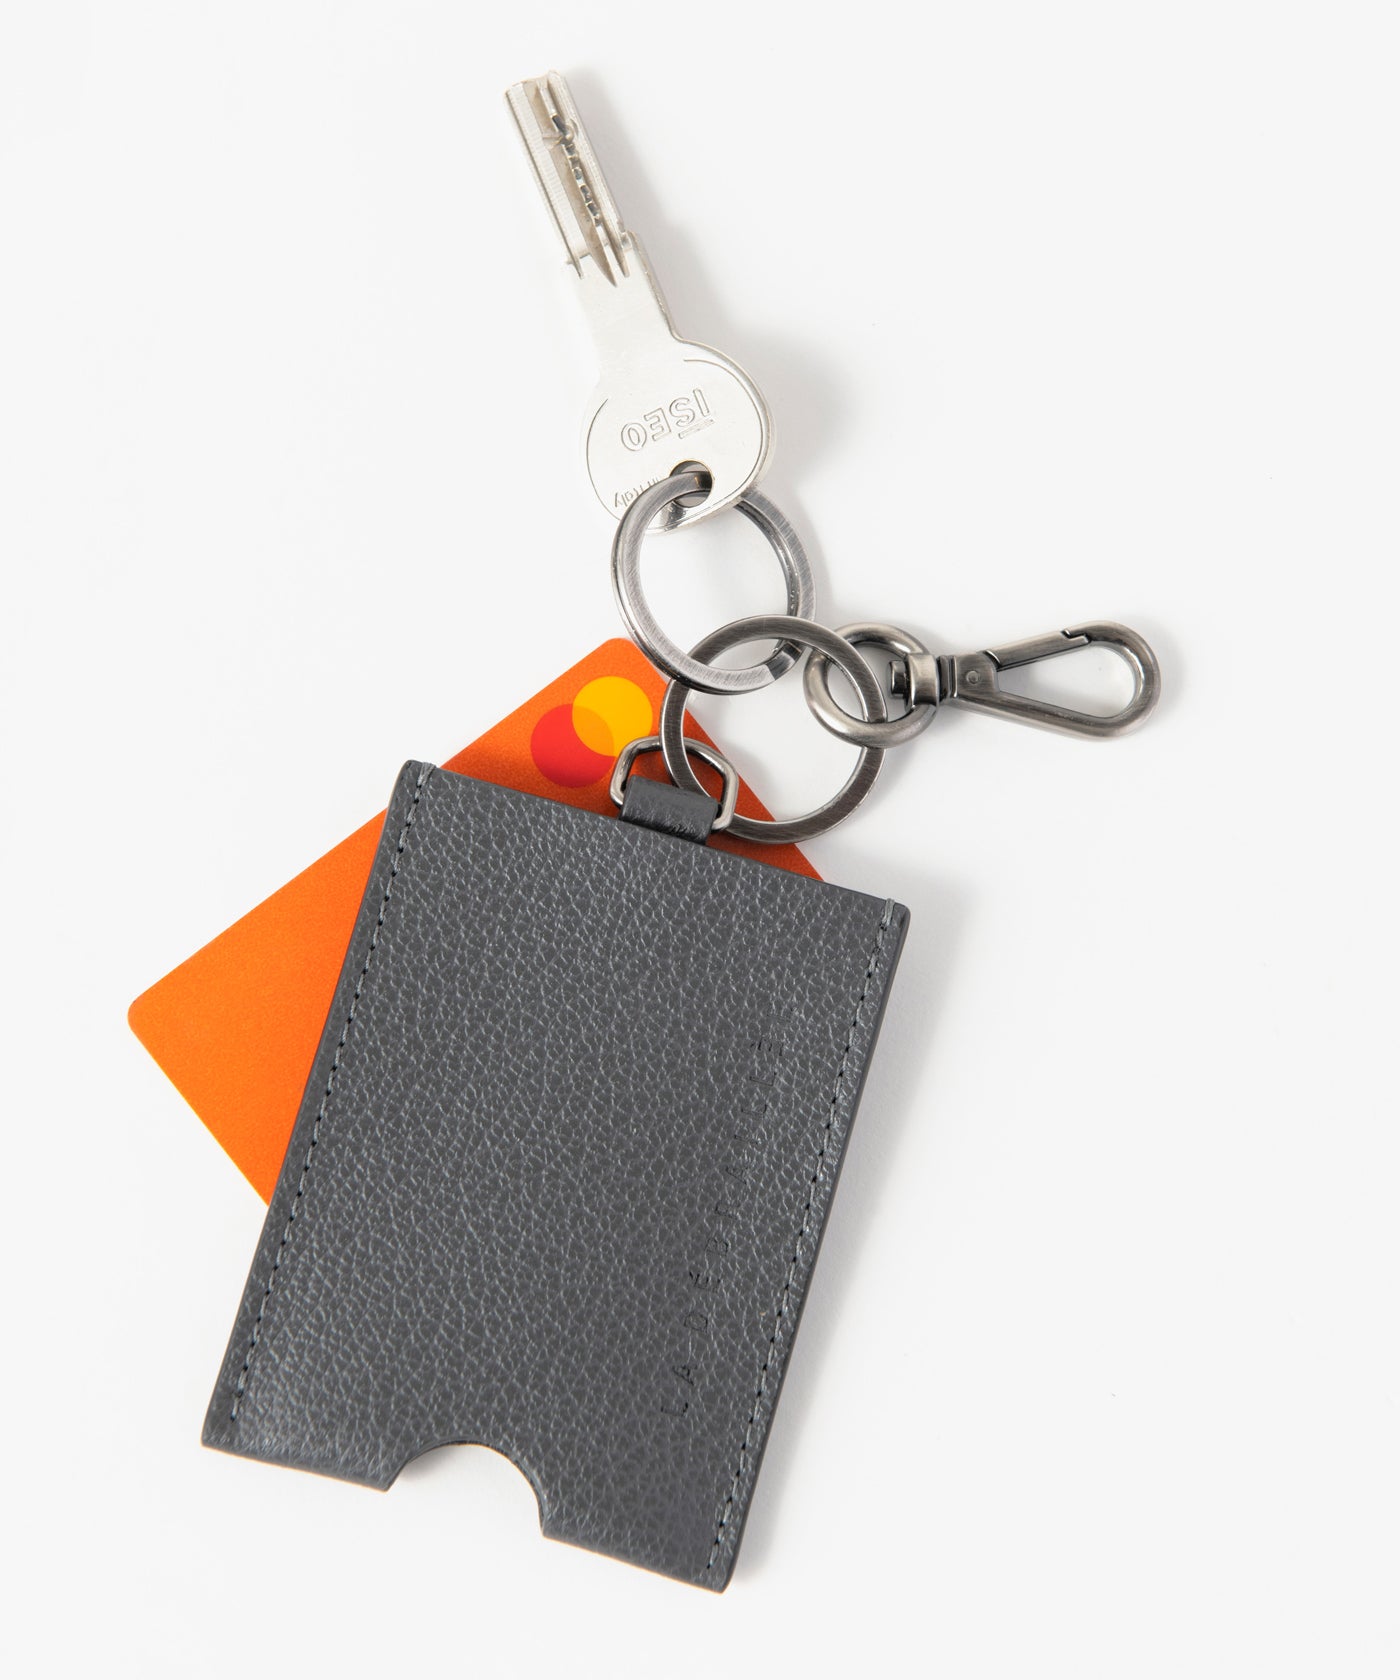 Credit Card Holder Wallet Keychain – lanyardlovebirds